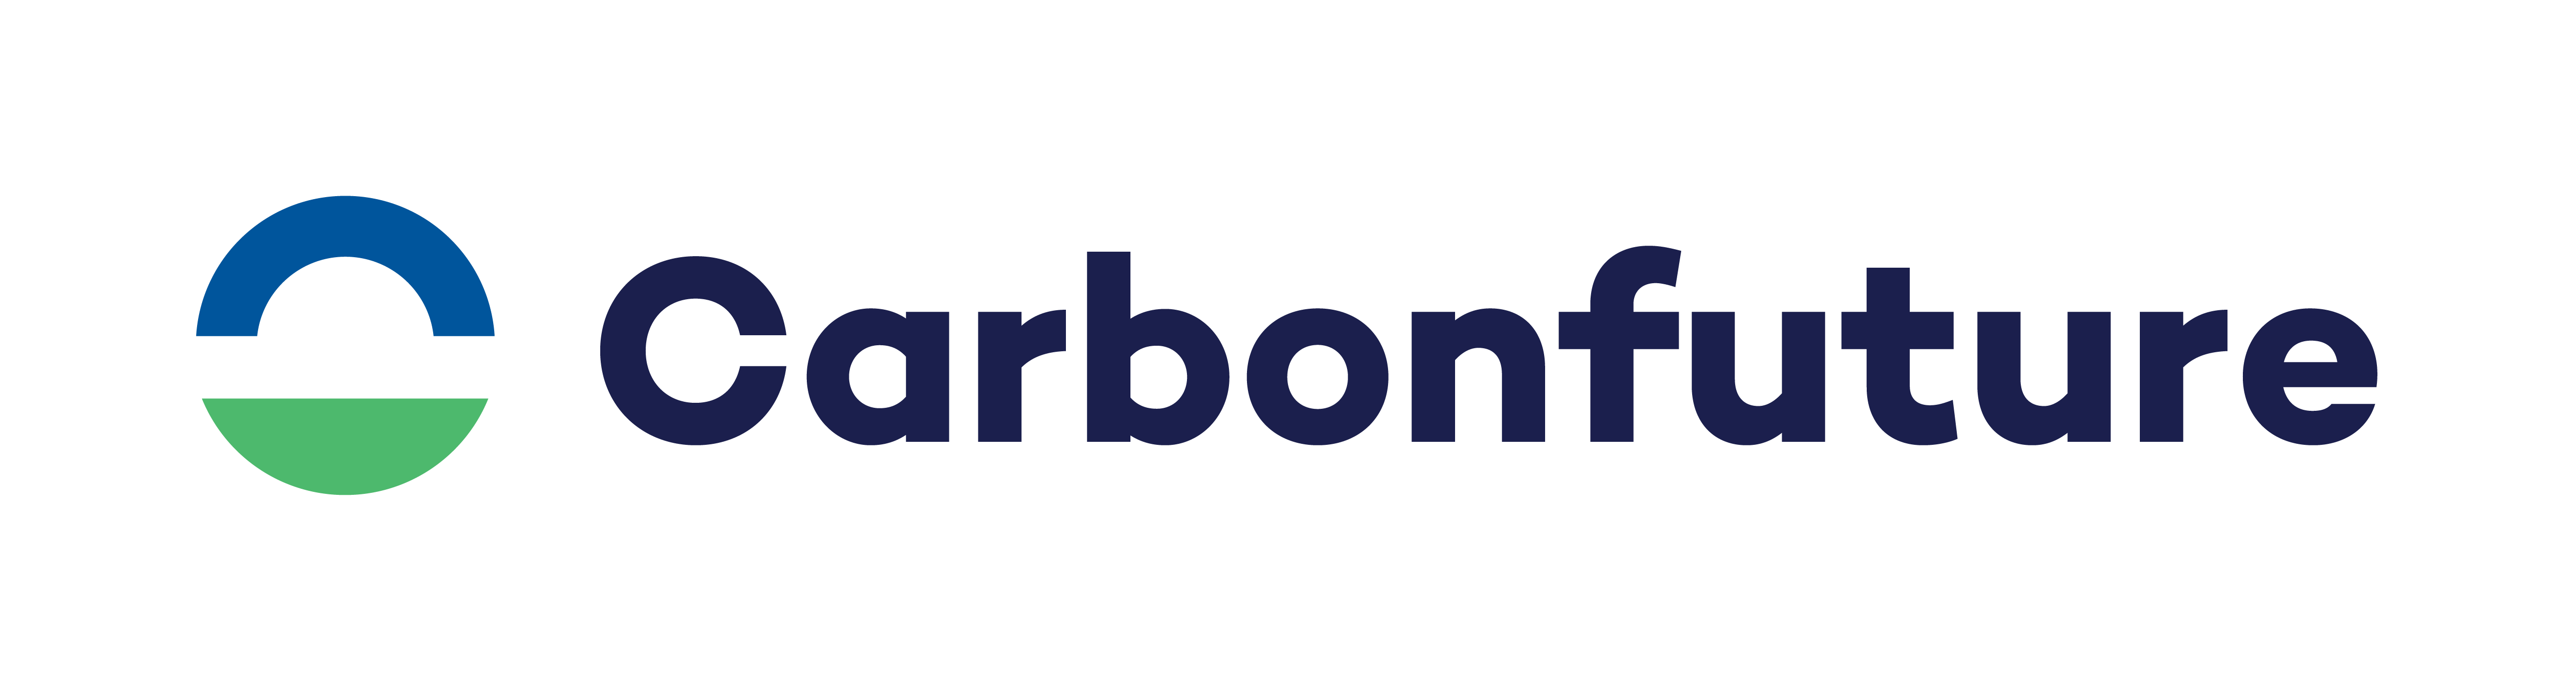 carbon future logo